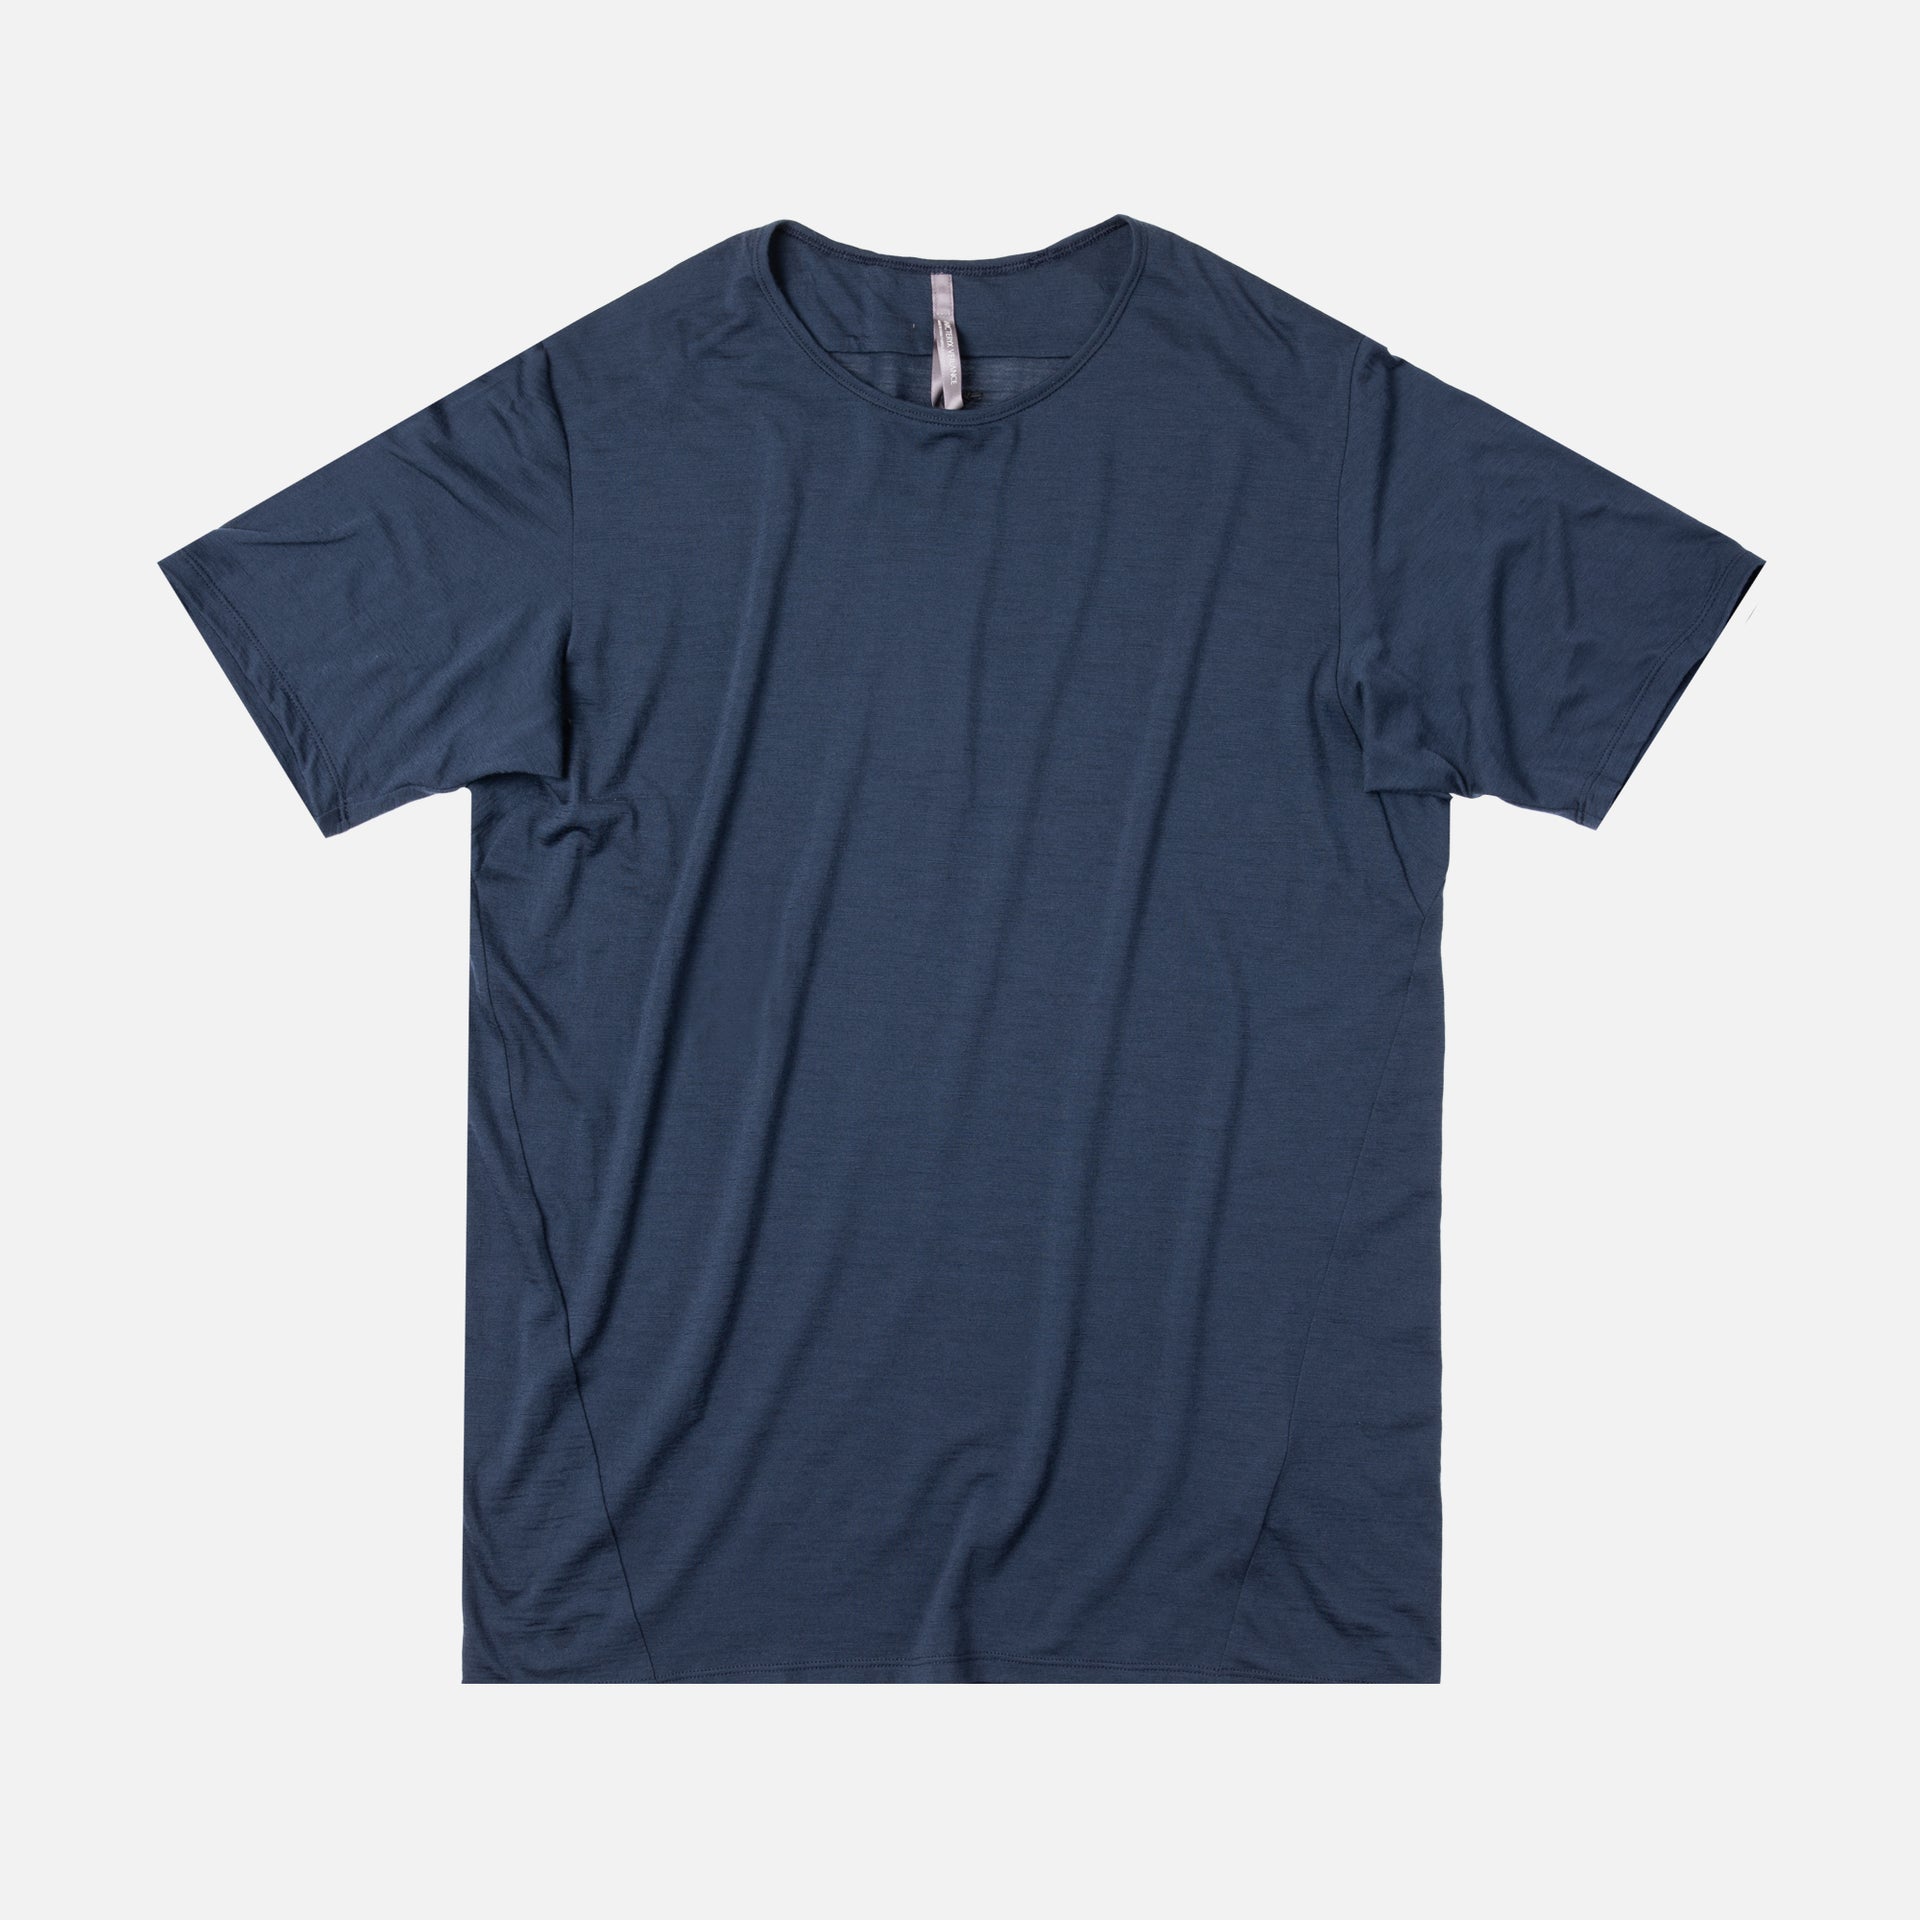 Veilance Frame Shirt - Navy